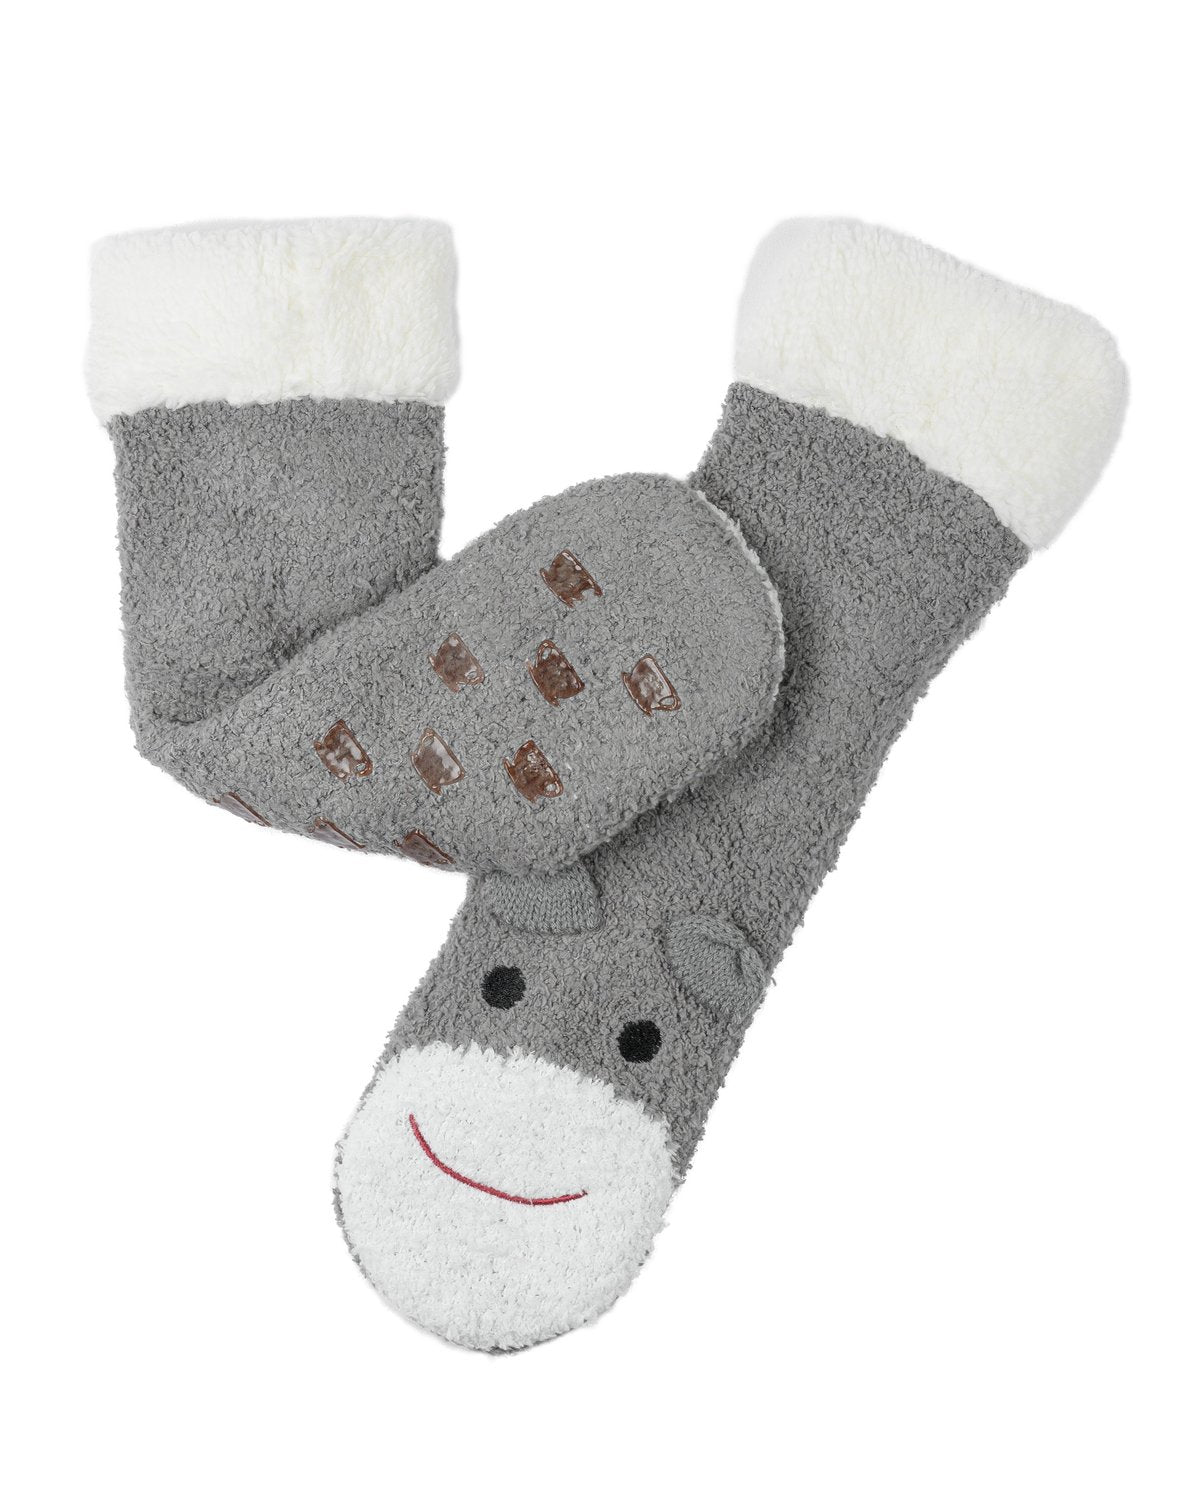 Coffee Shoppe Marshmallow Critter Lounge Socks - Sock Monkey